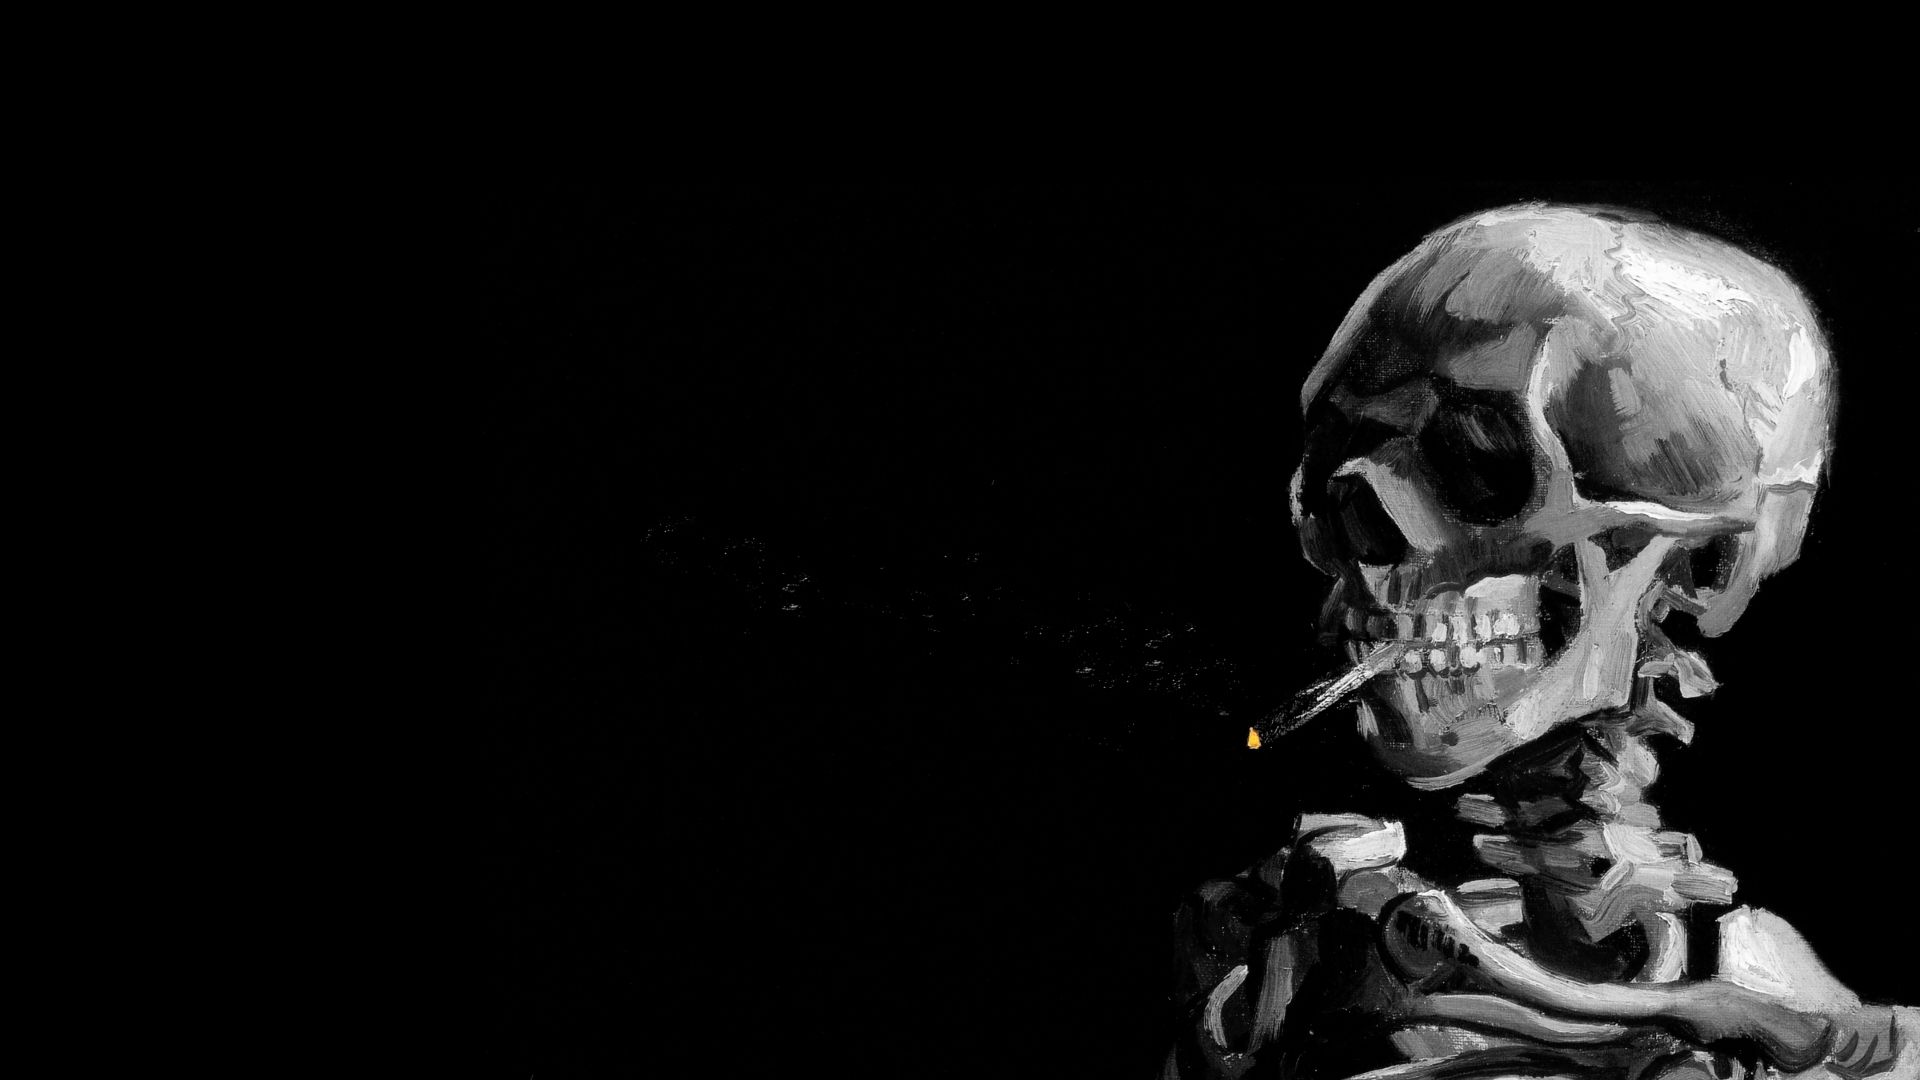 Skeleton smoking a cigarette - Skeleton